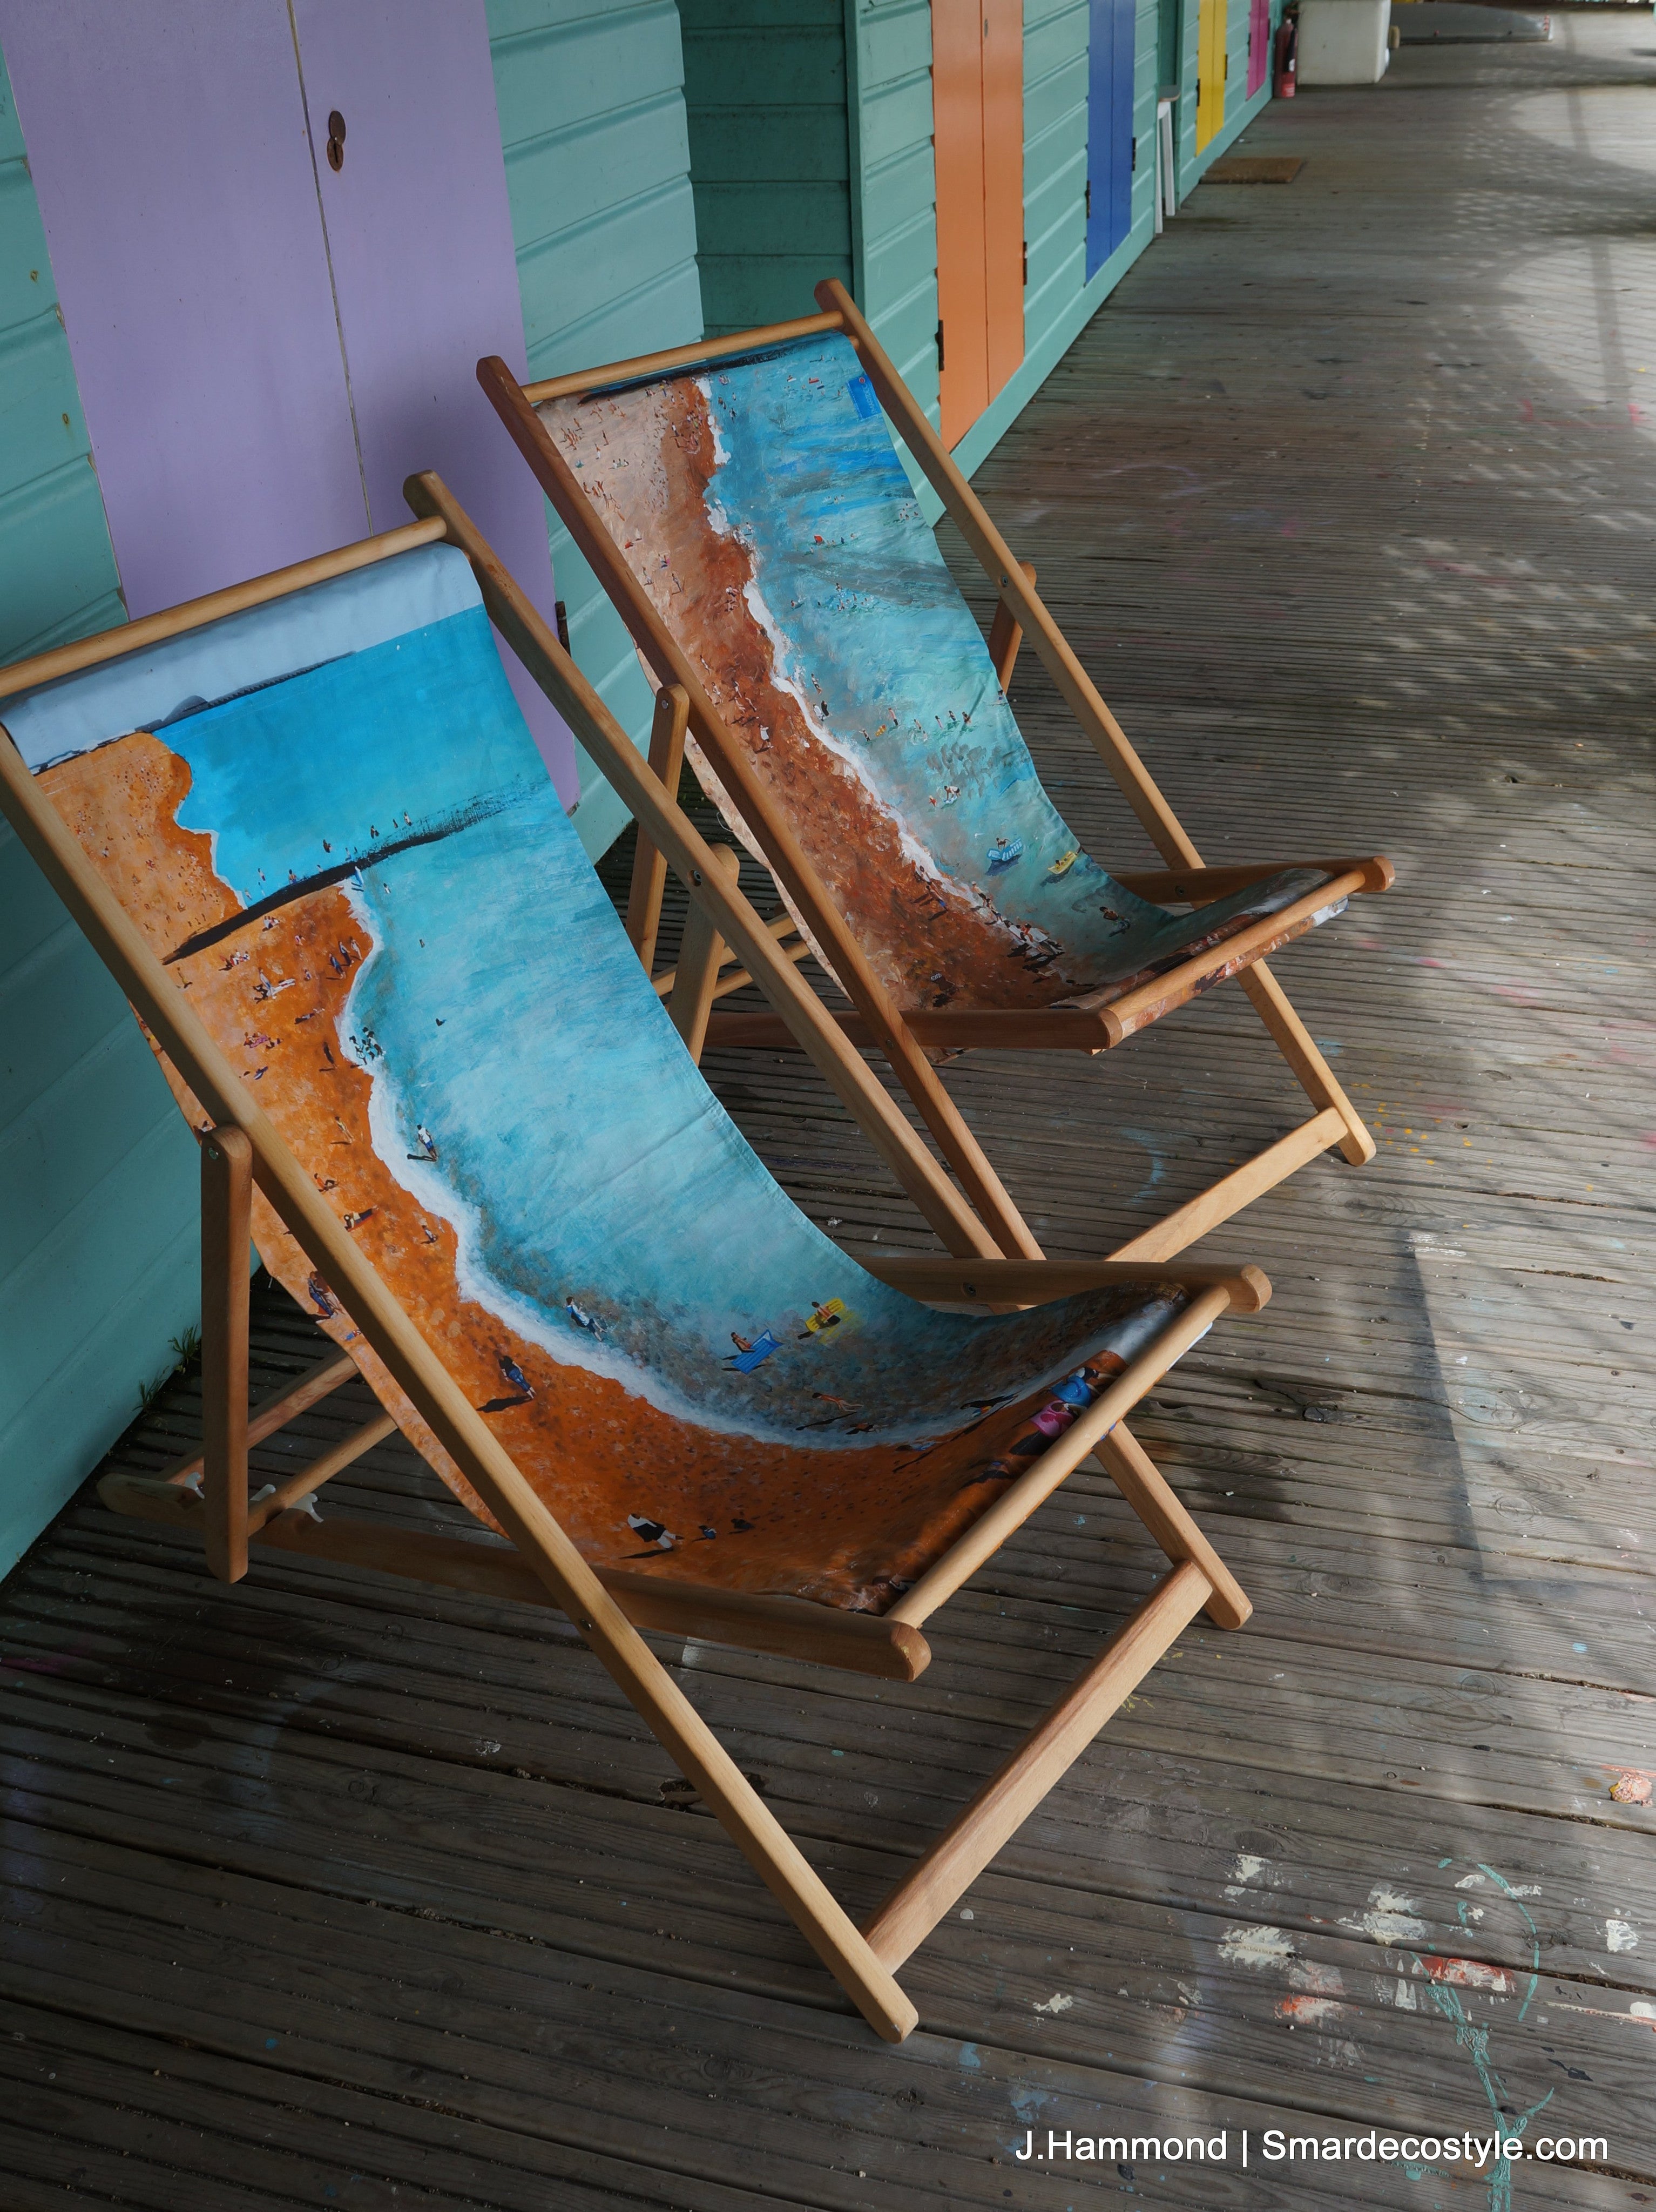 Deckchair - Traditional Seaside - Life's a Beach  Smart Deco Homeware Lighting and Art by Jacqueline hammond